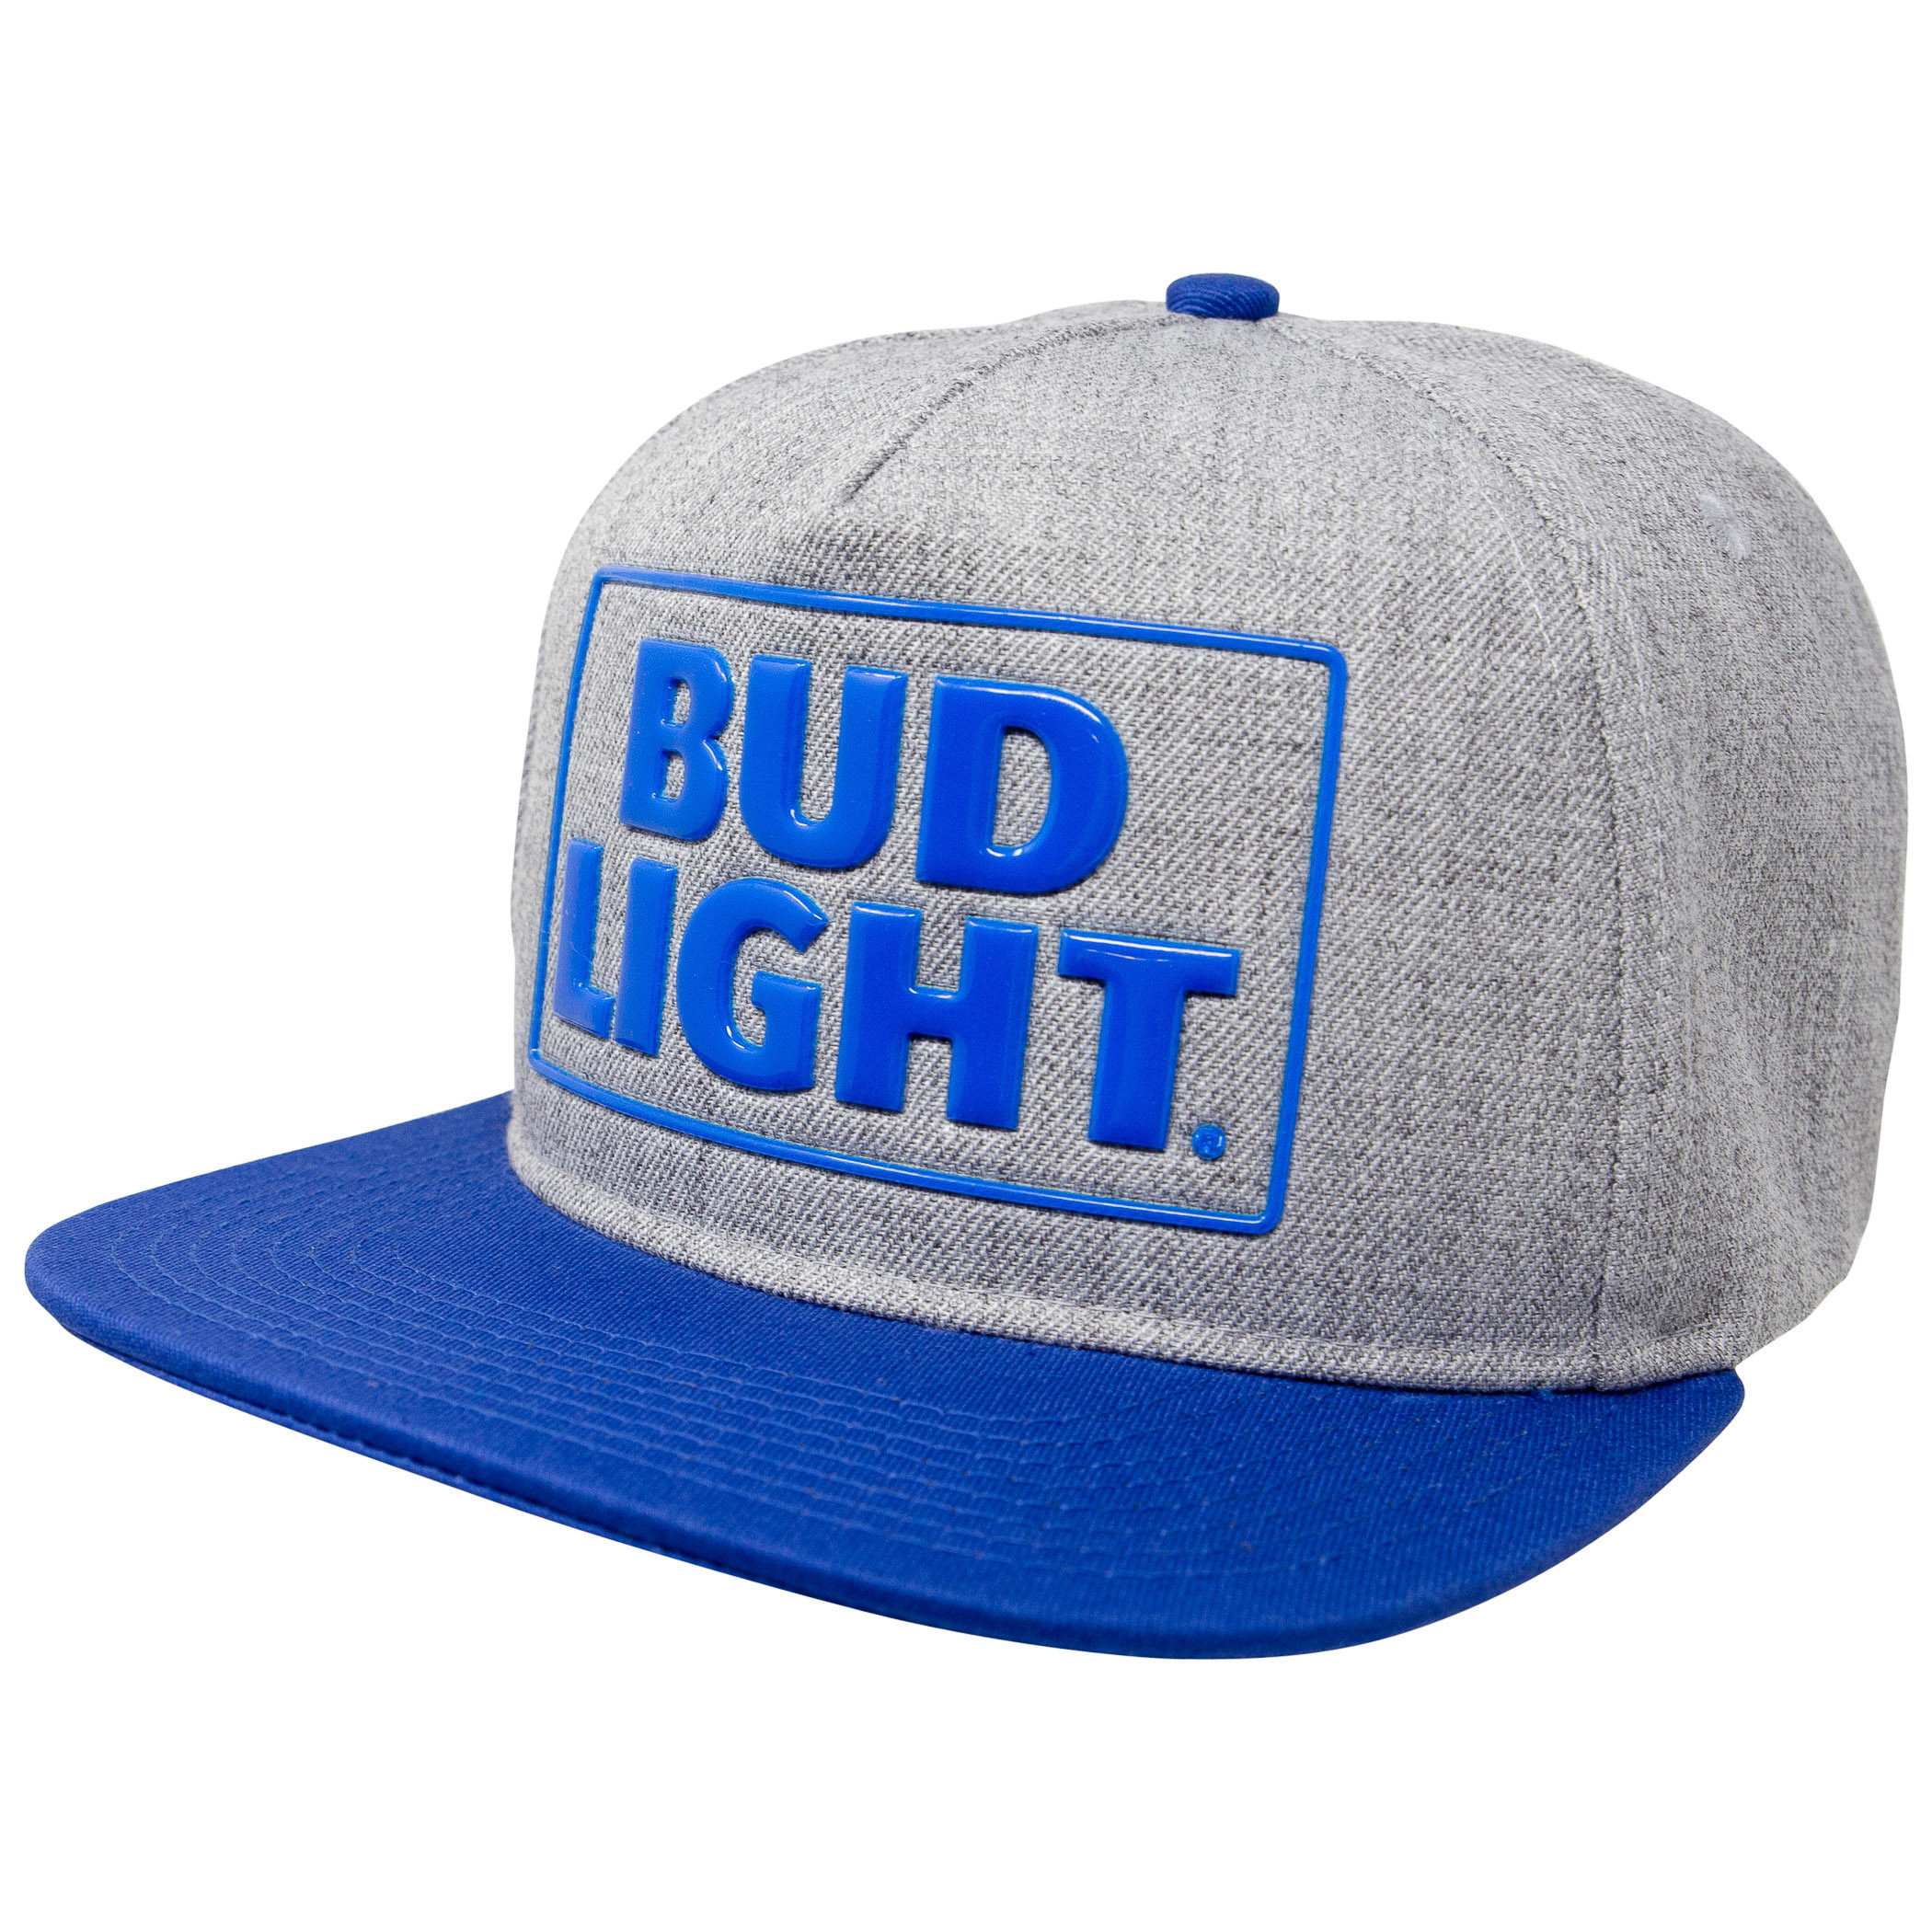 Bud Light Blue And Grey Adjustable Snapback Hat